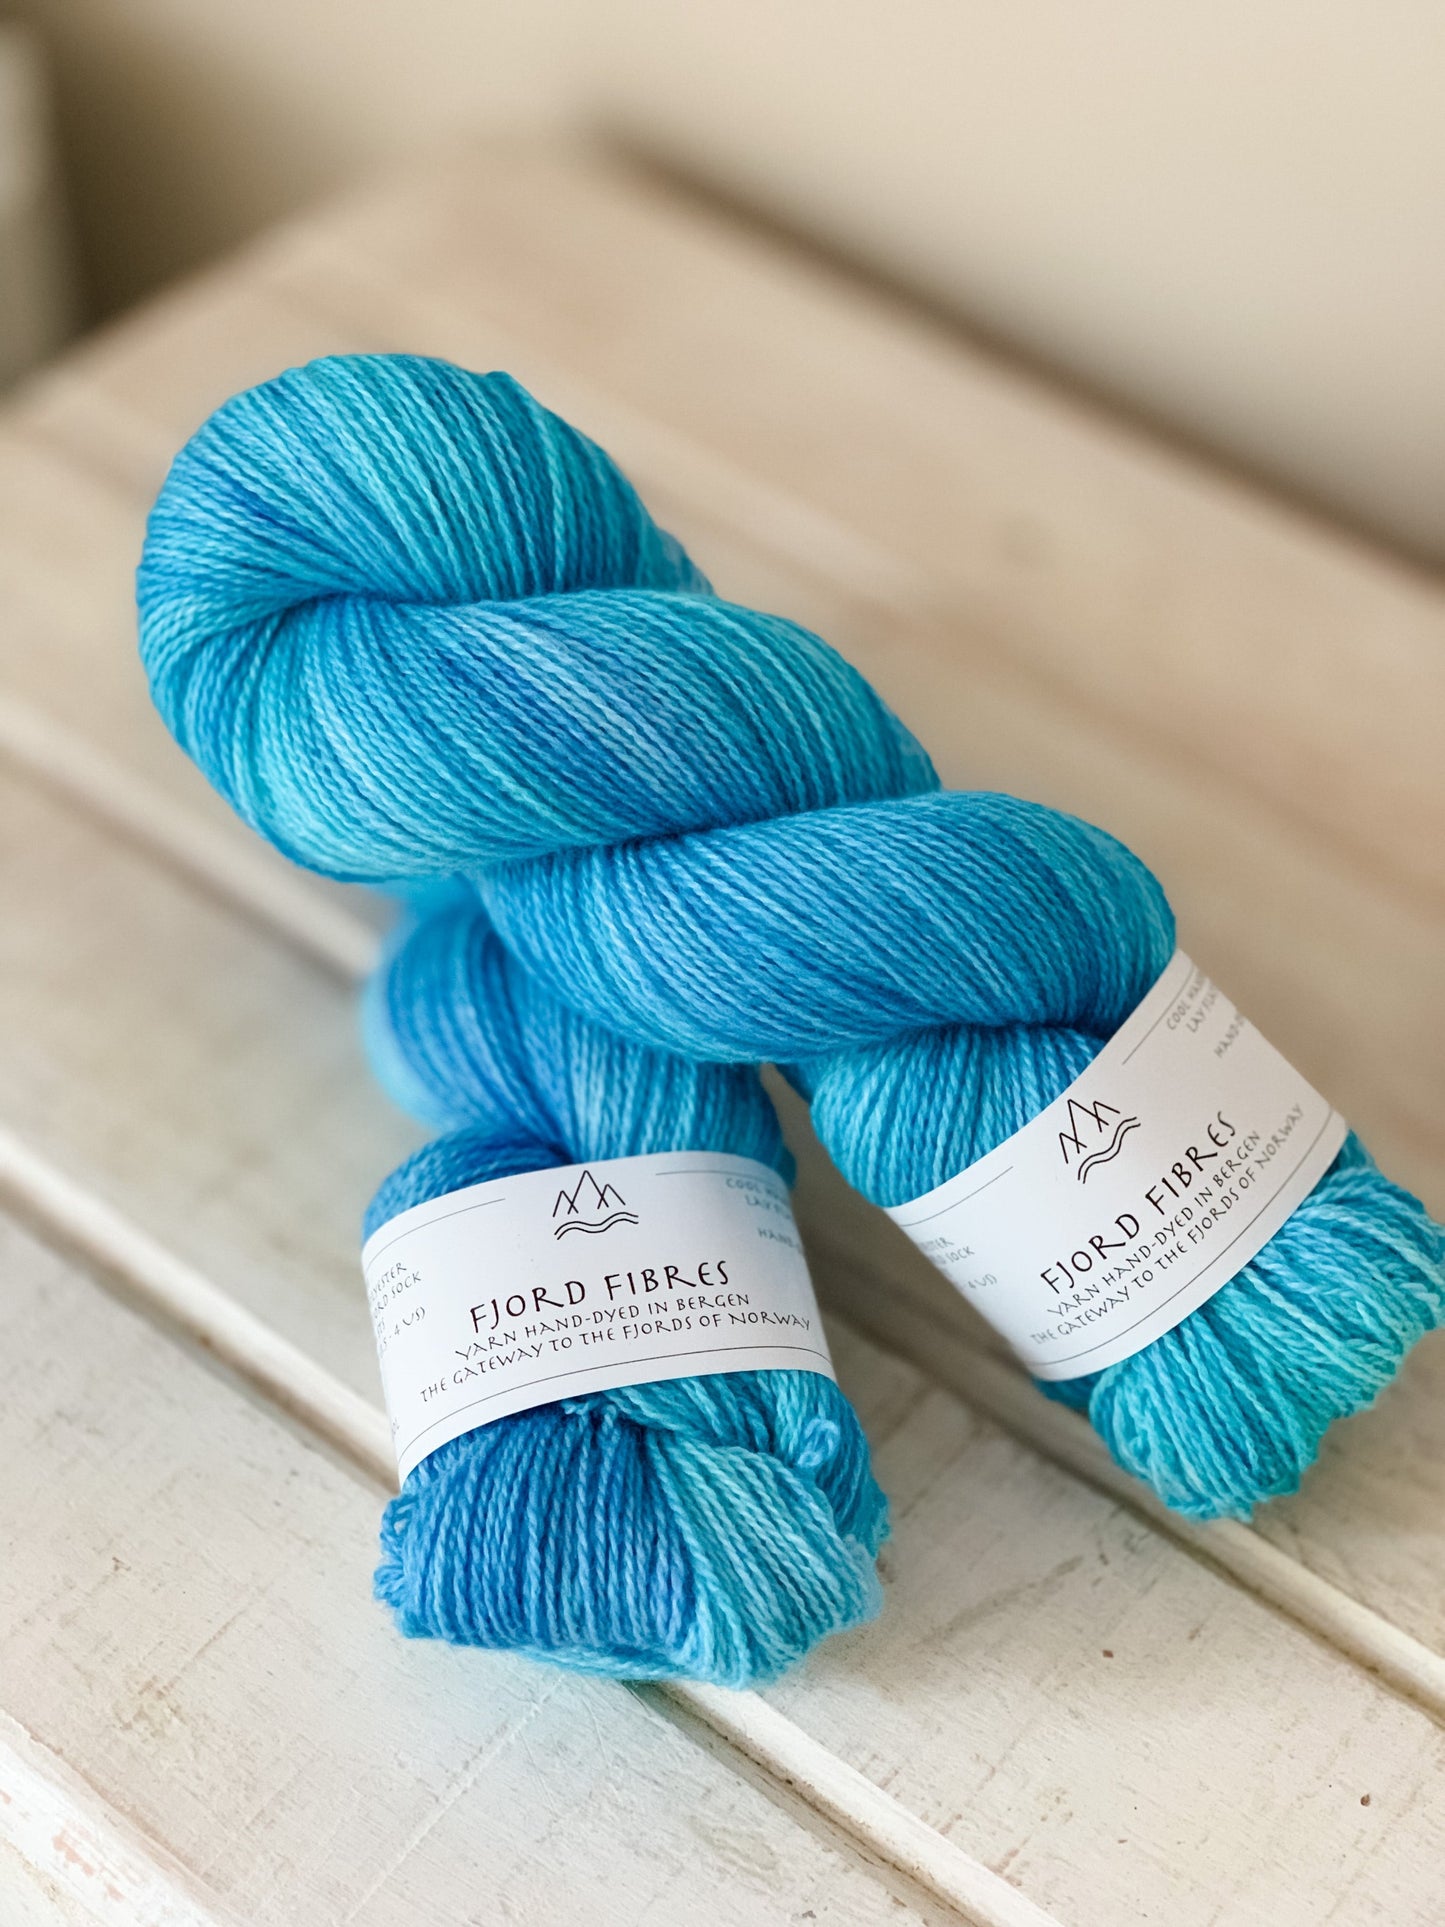 Glacial Water - Trollfjord sock - Hand Dyed Yarn - Variegated Yarn